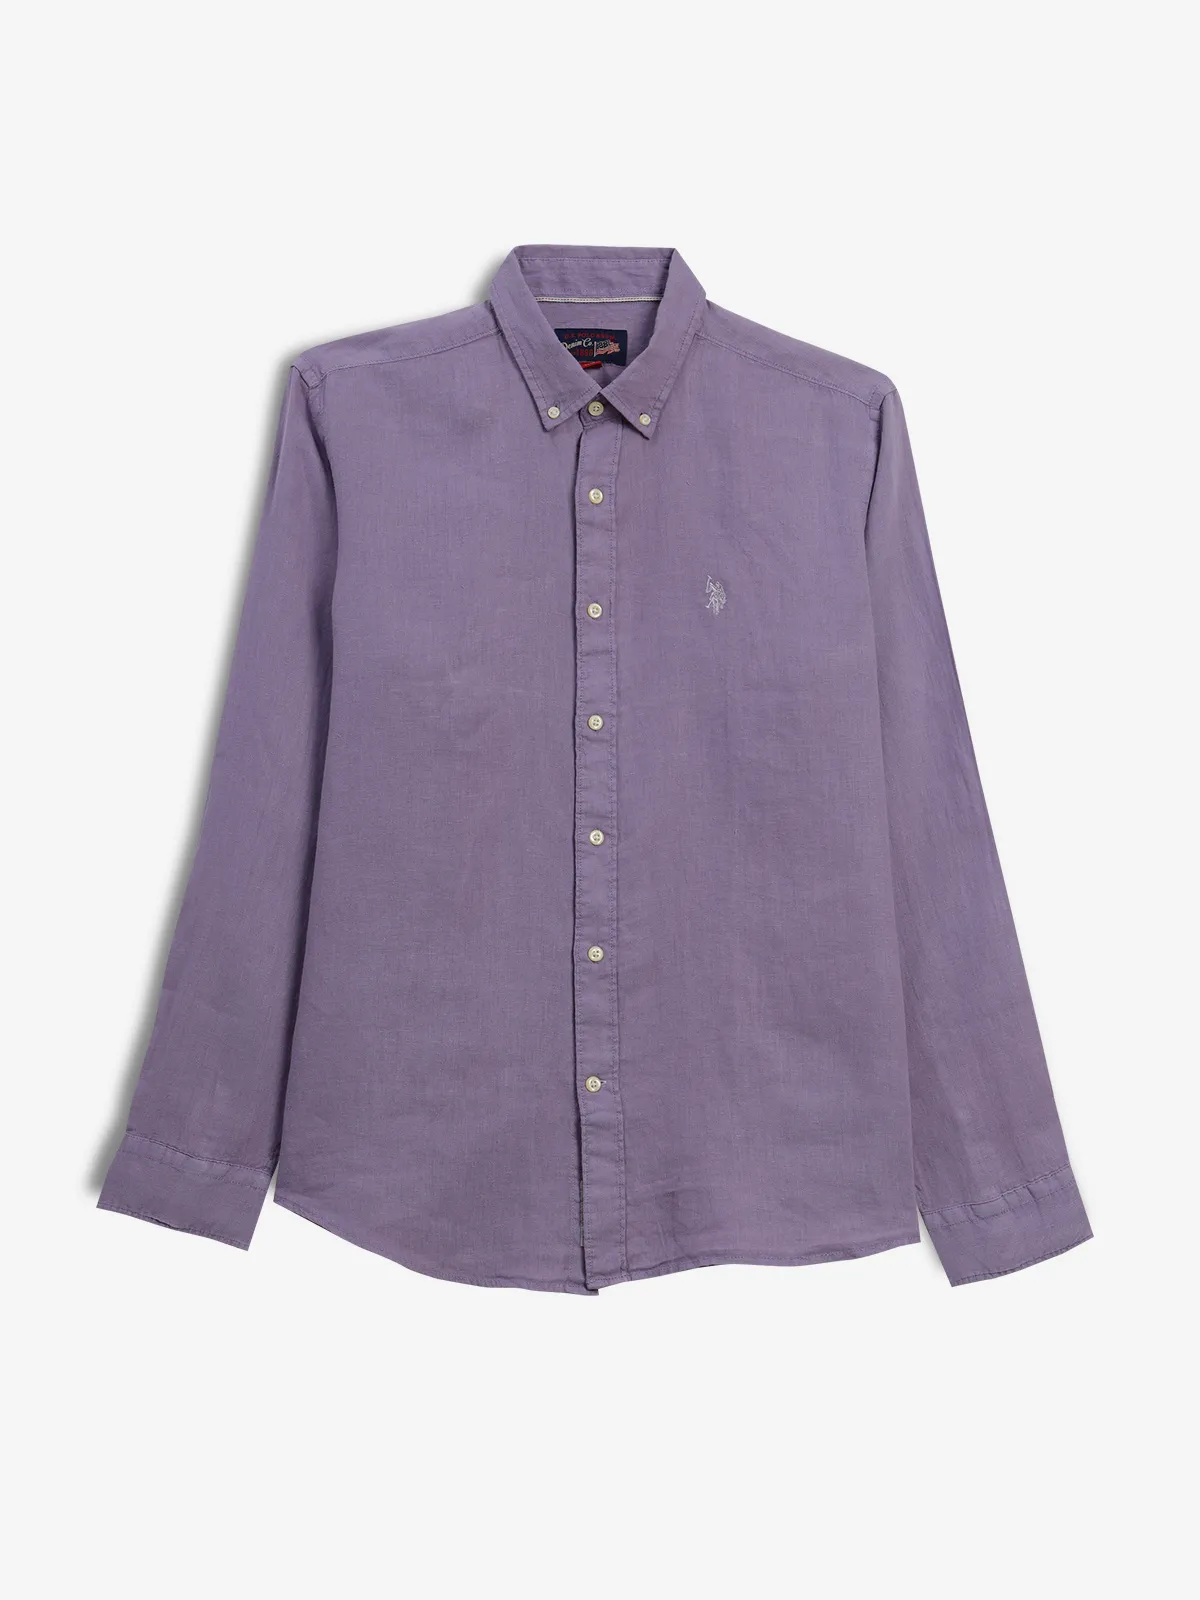 U S POLO ASSN purple plain casual shirt